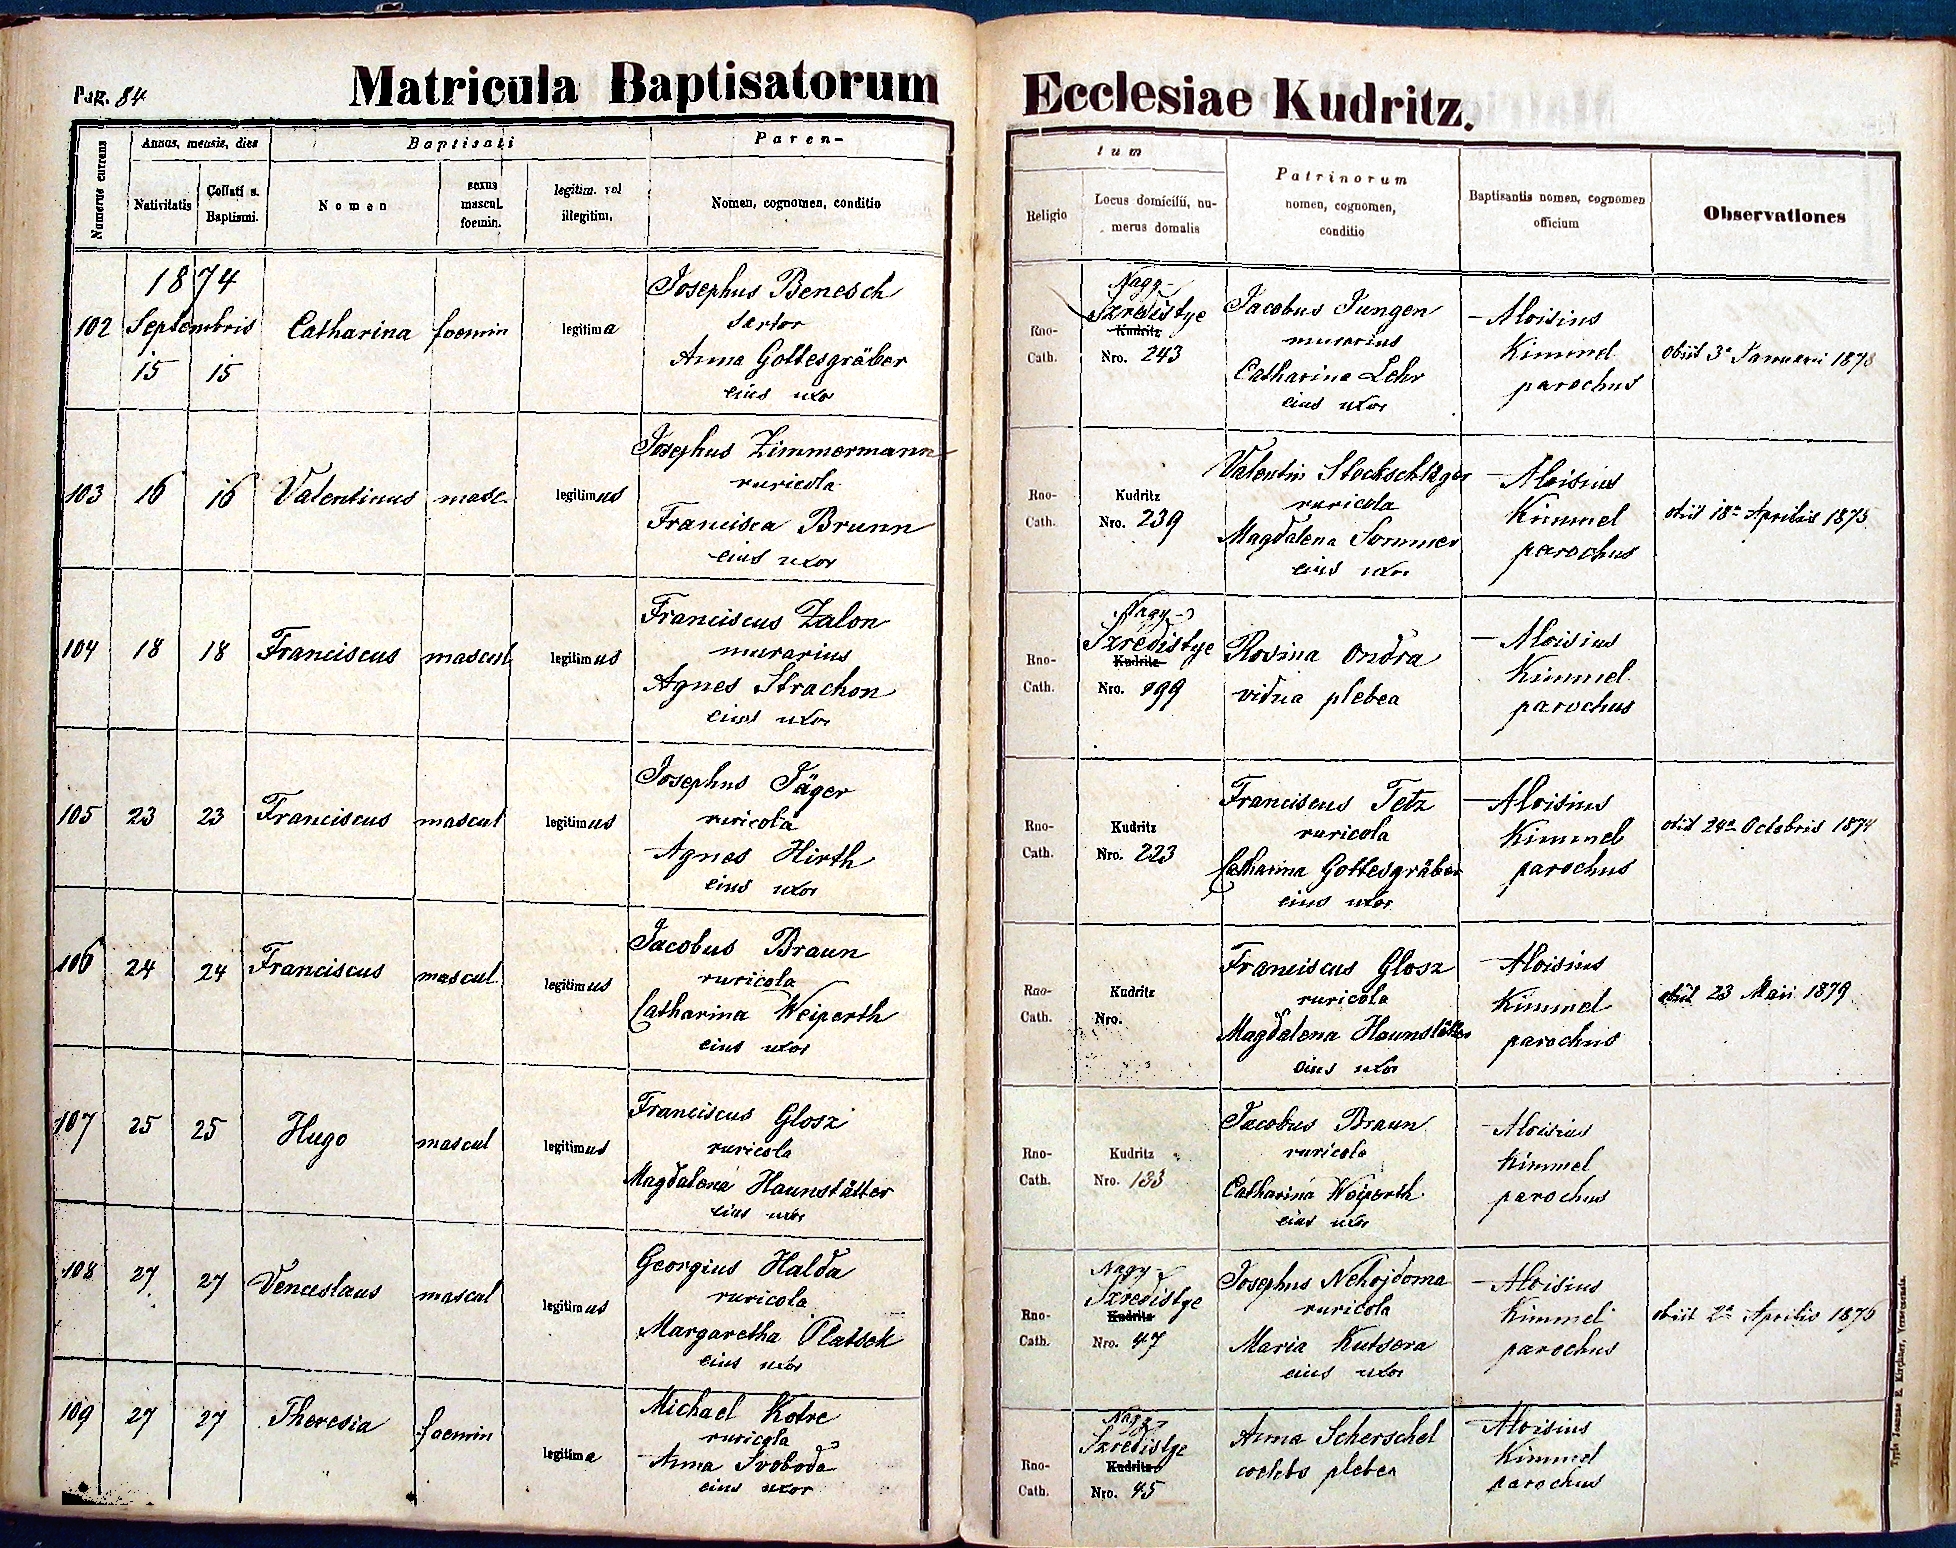 images/church_records/BIRTHS/1884-1899B/1889/084